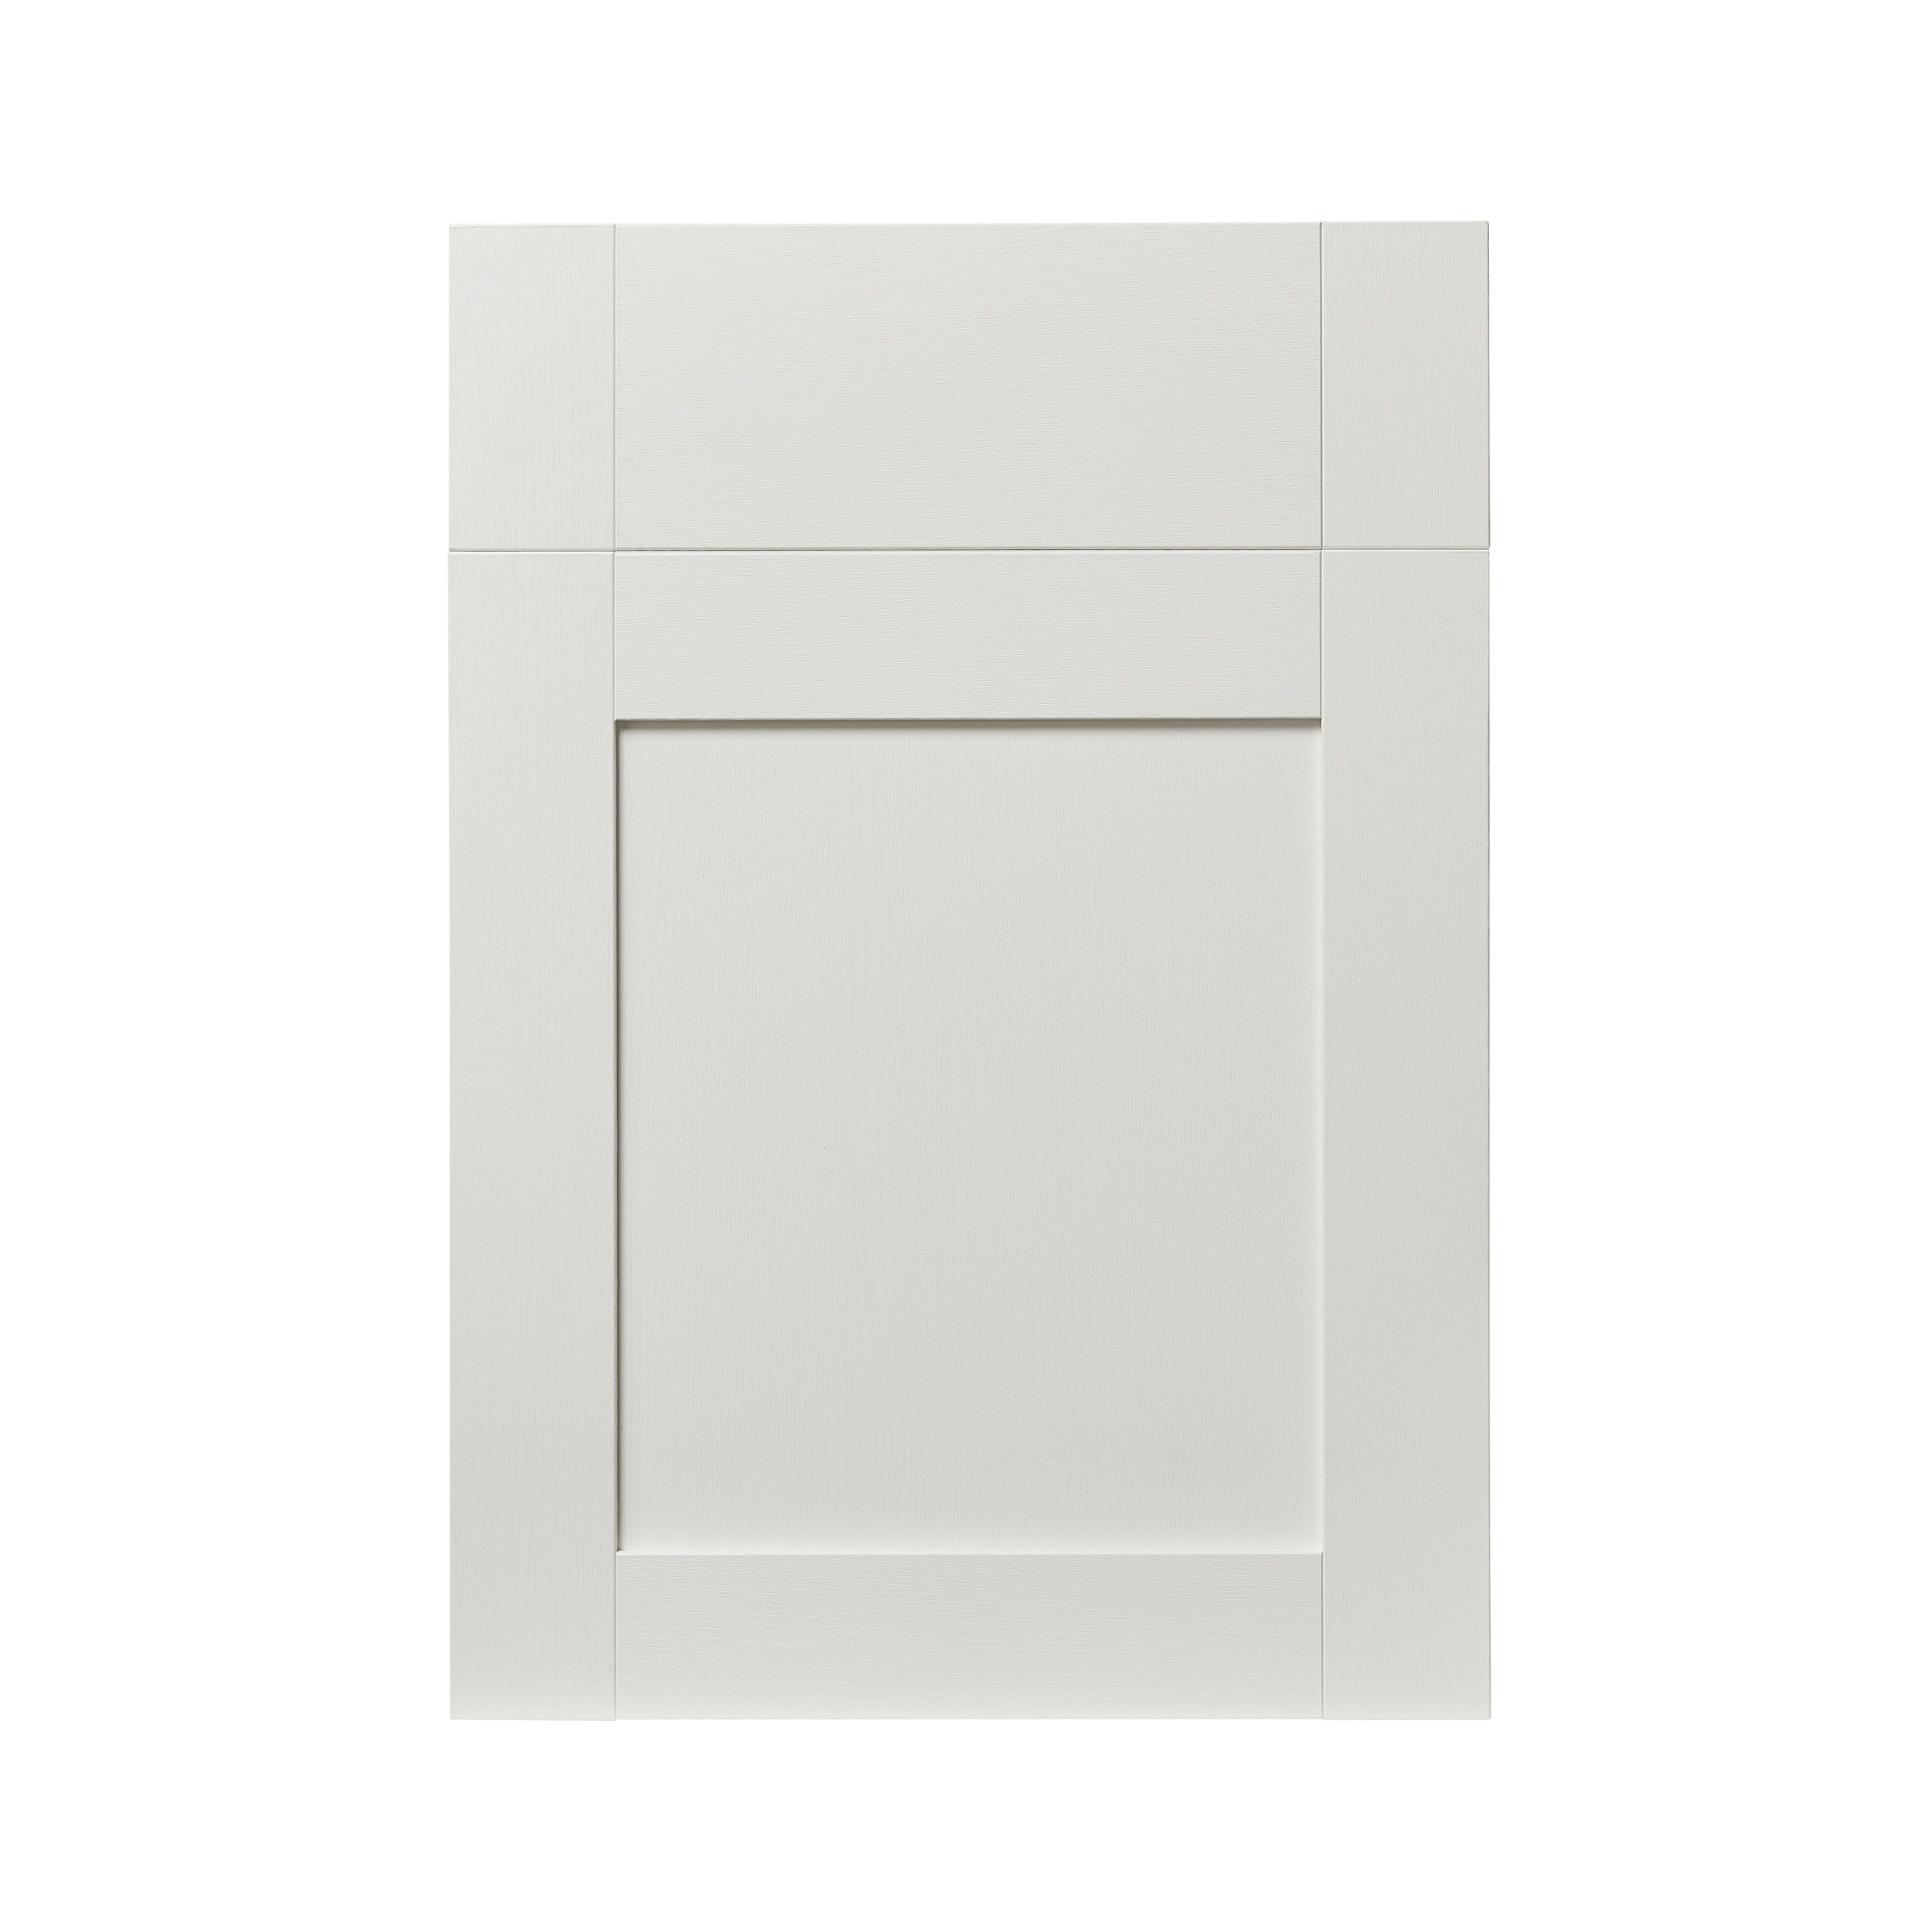 GoodHome Alpinia Matt ivory painted wood effect shaker Drawerline Cabinet door, (W)500mm (H)715mm (T)18mm